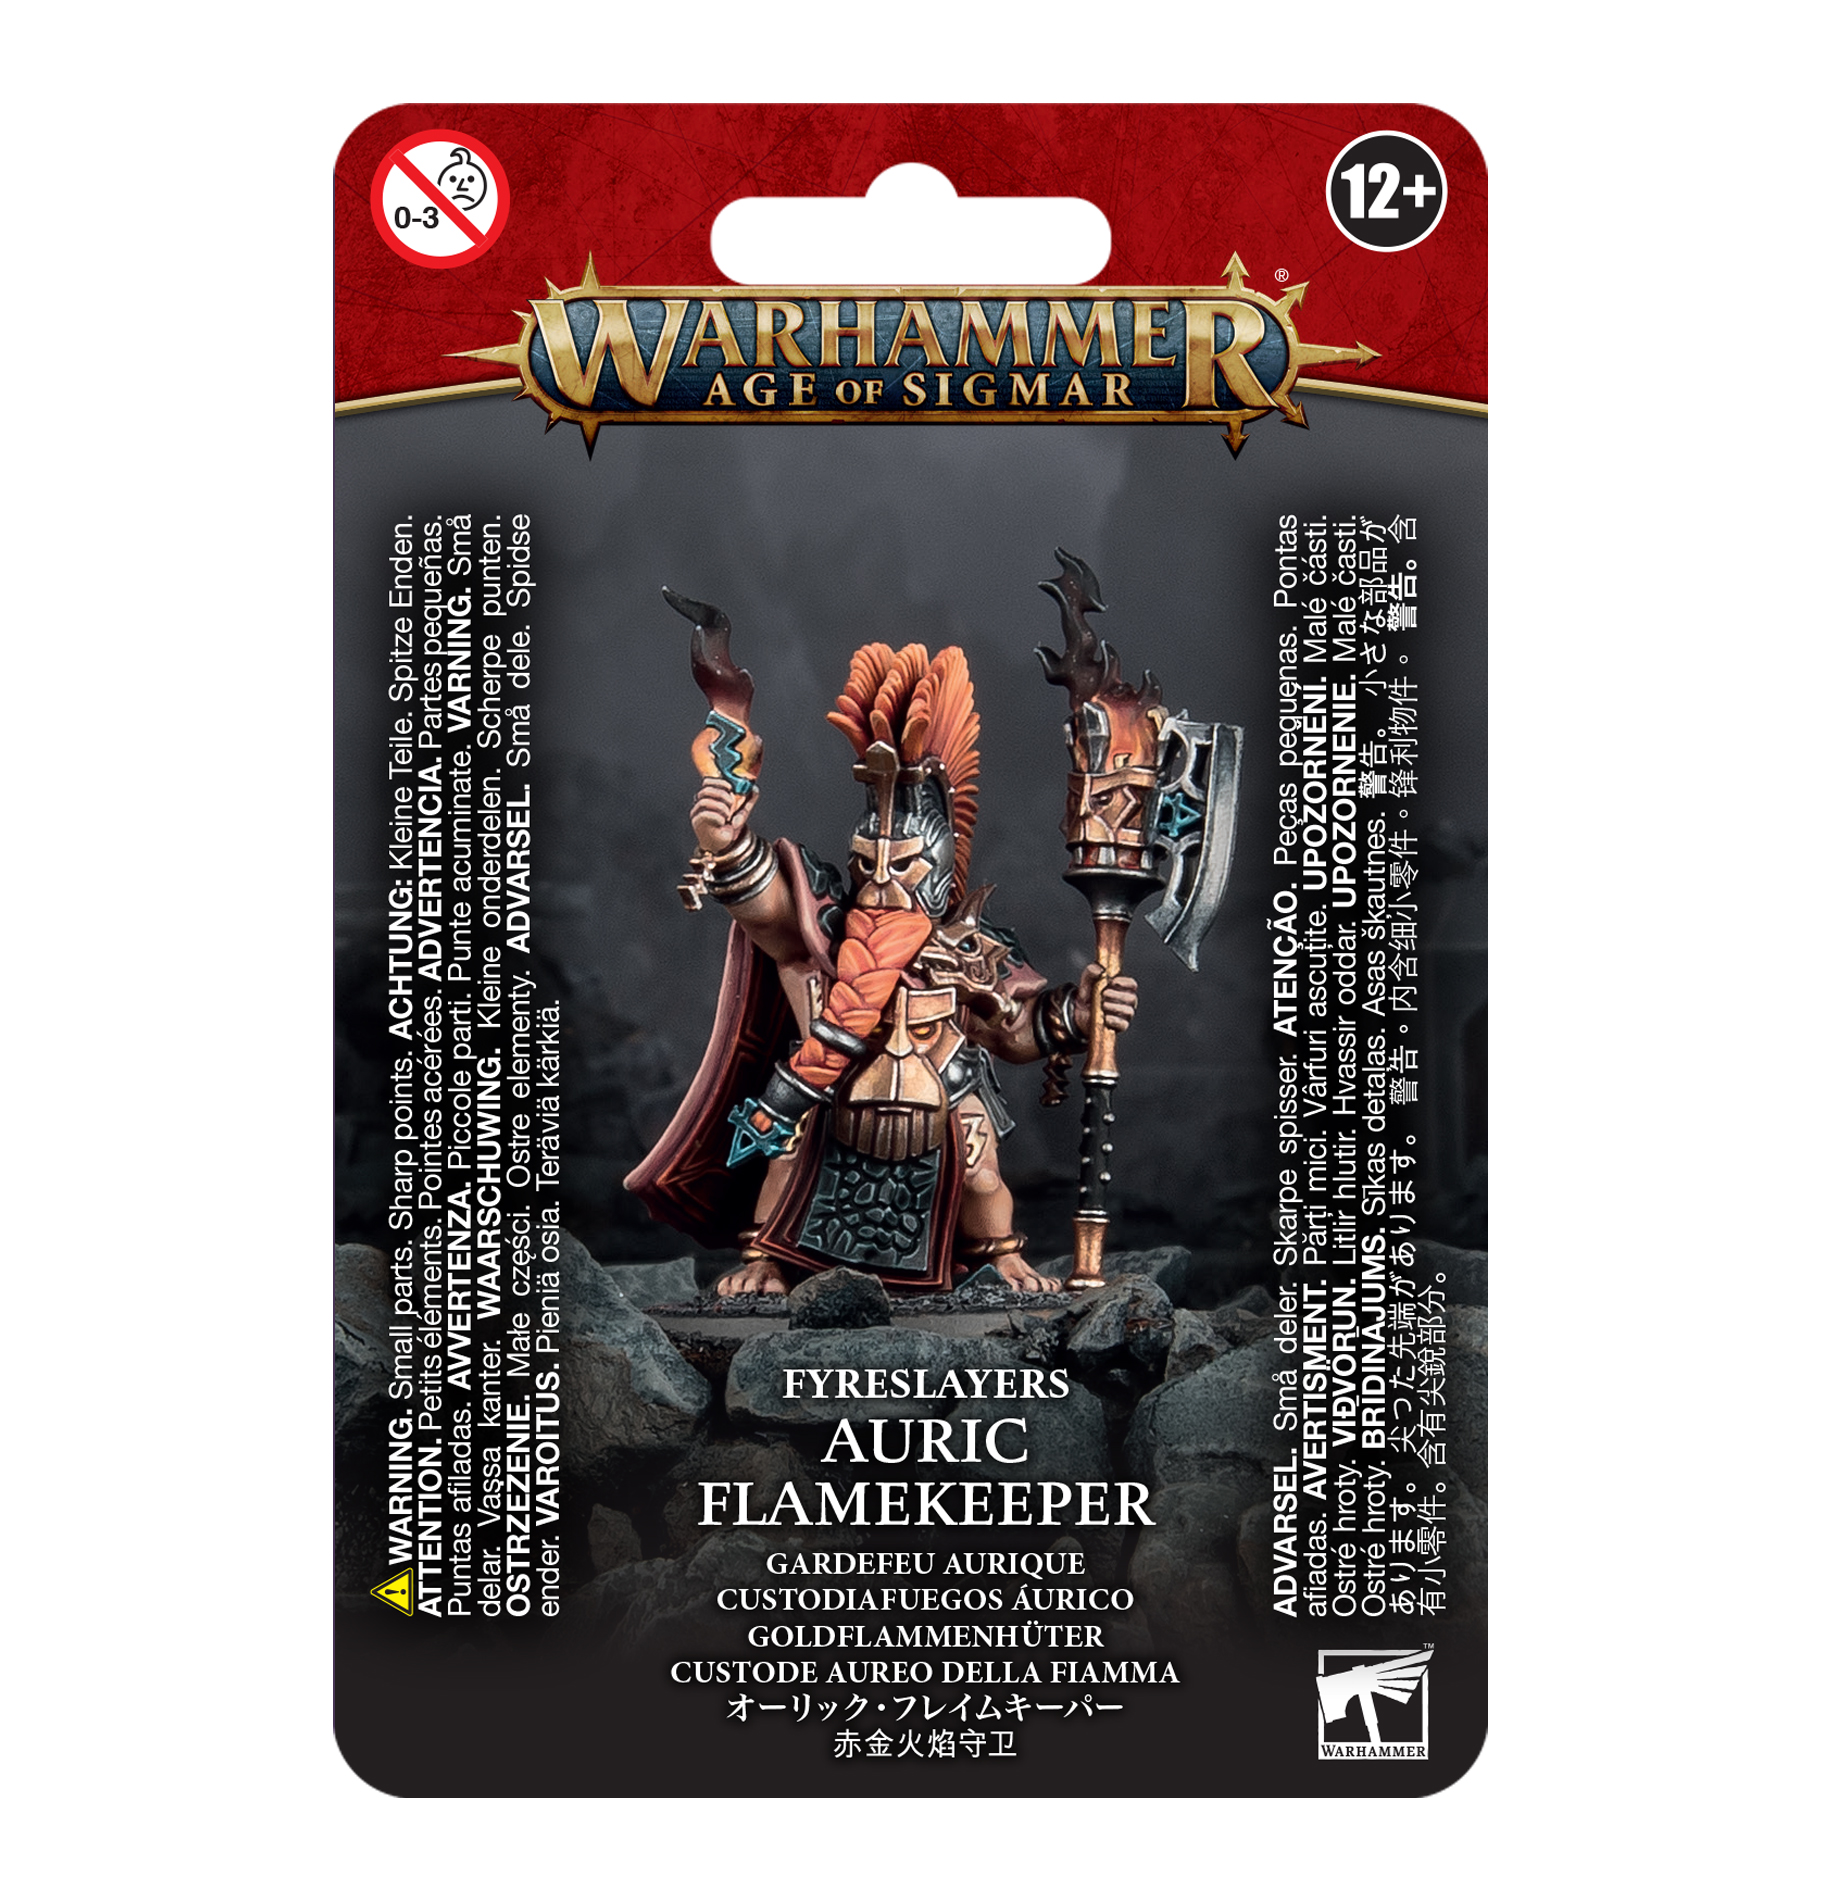 Auric Flamekeeper - 84-44 - Fireslayers - Warhammer Age of Sigmar